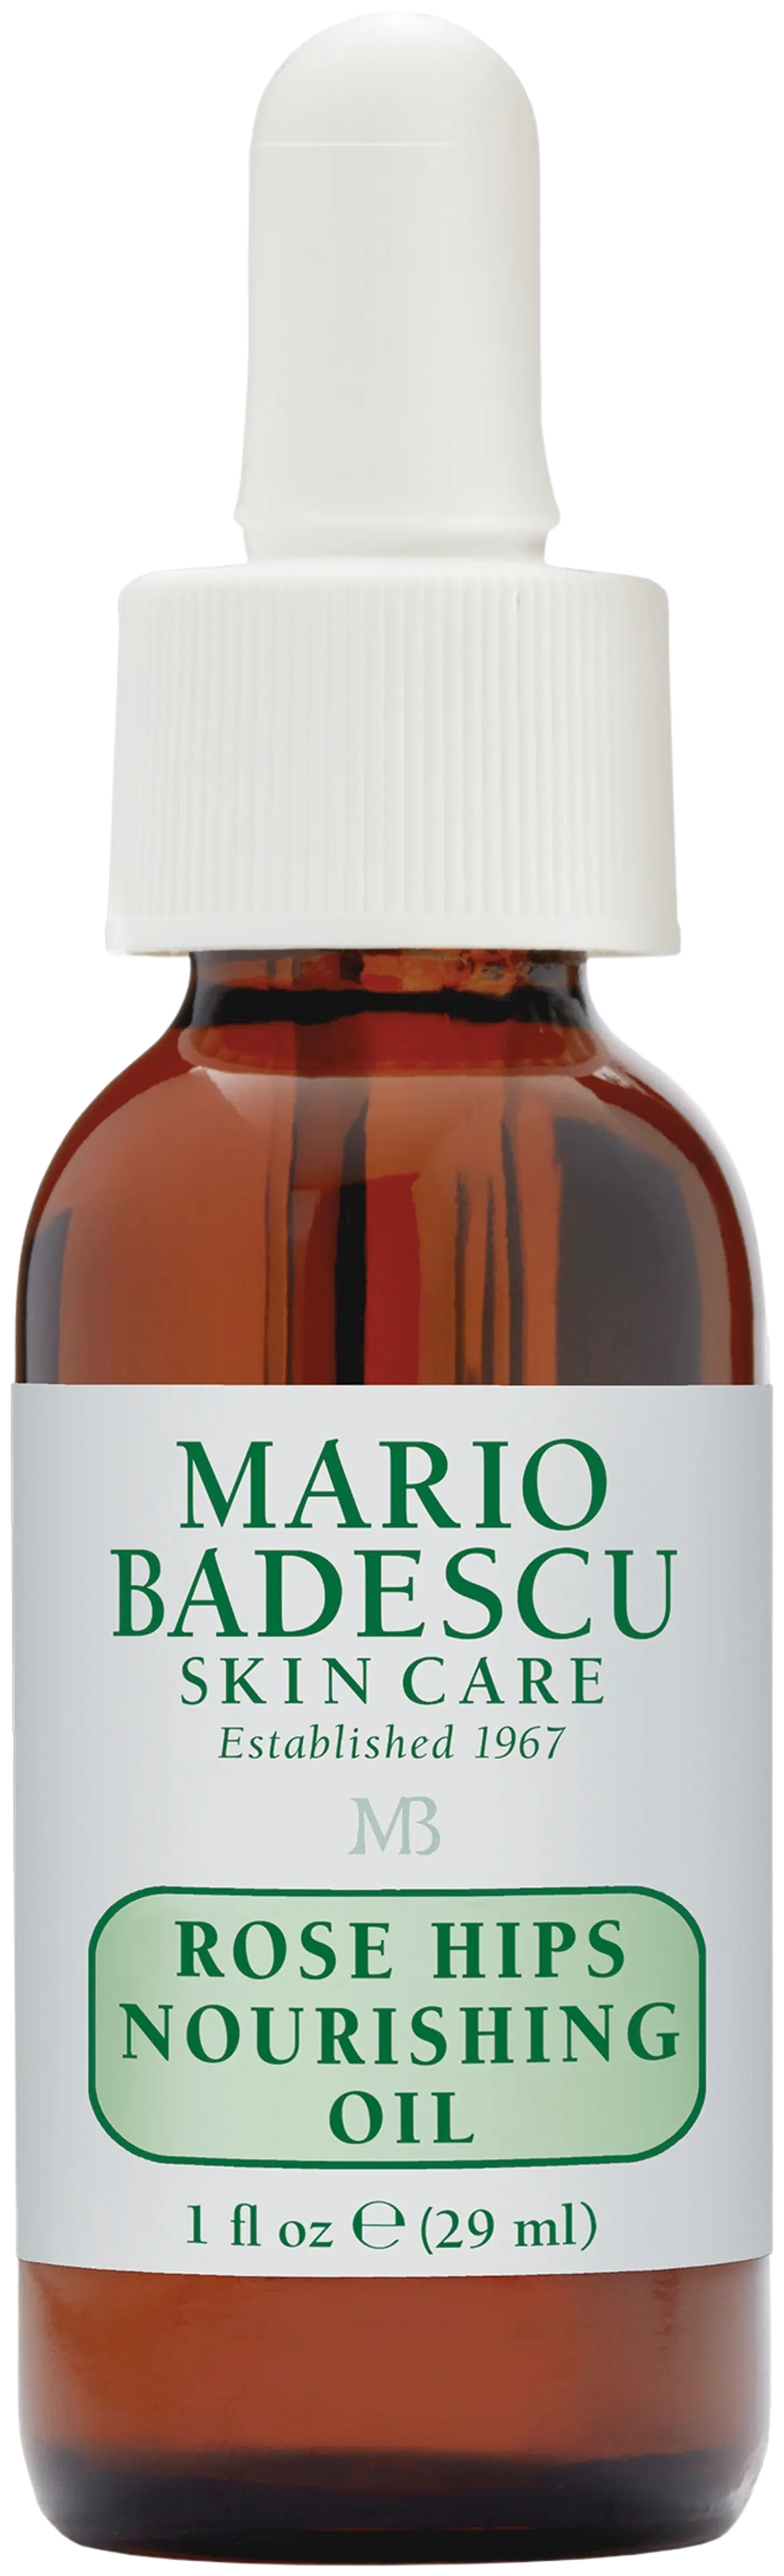 Mario Badescu Rose Hips Nourishing Oil ravitseva kasvoöljy 29ml